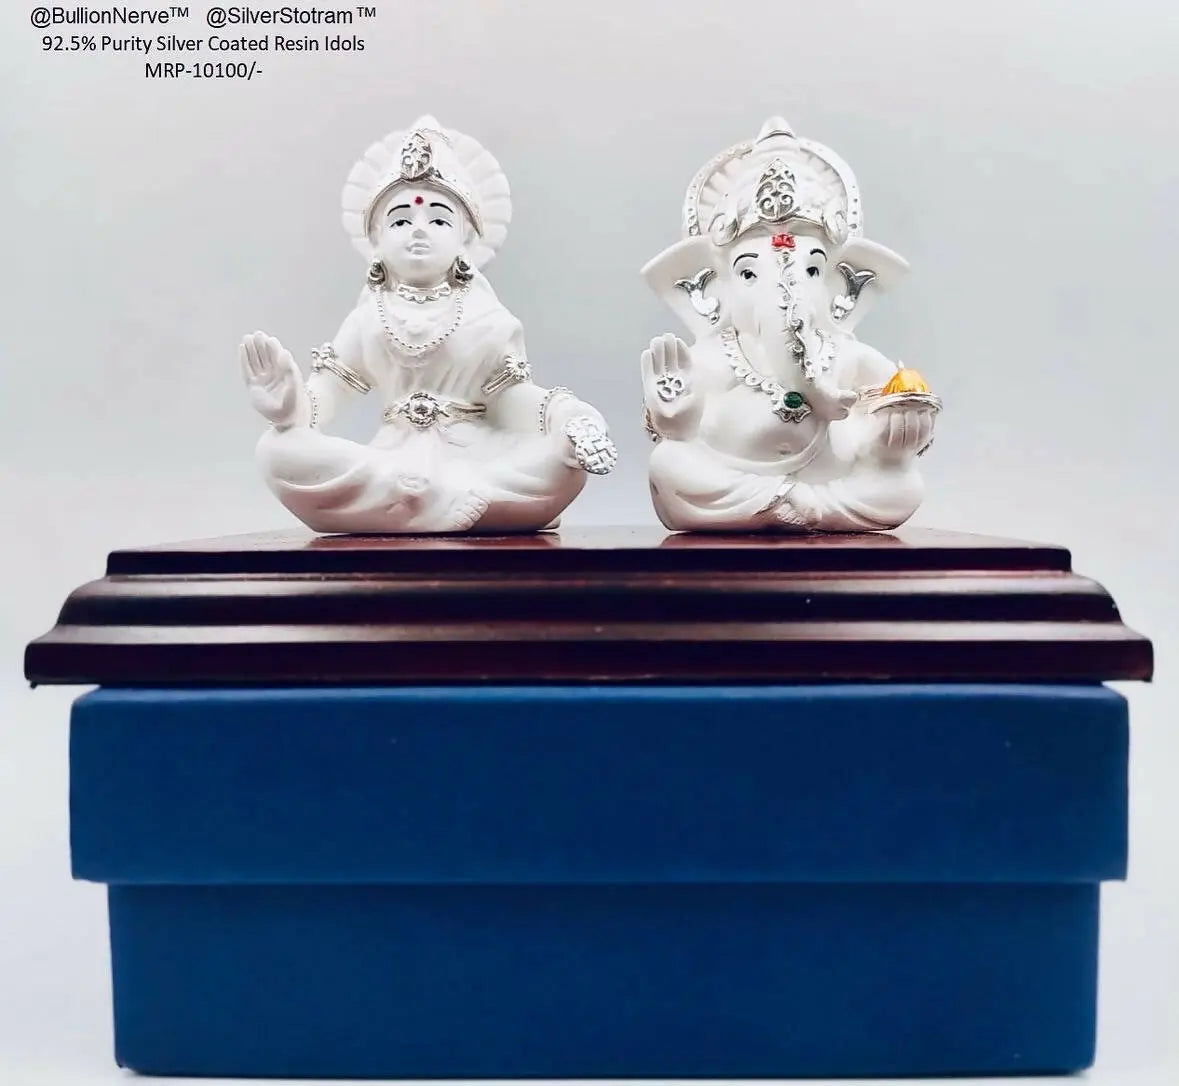 92.5% Purity Silver Coated Resin Idols Sarafa Bazar India